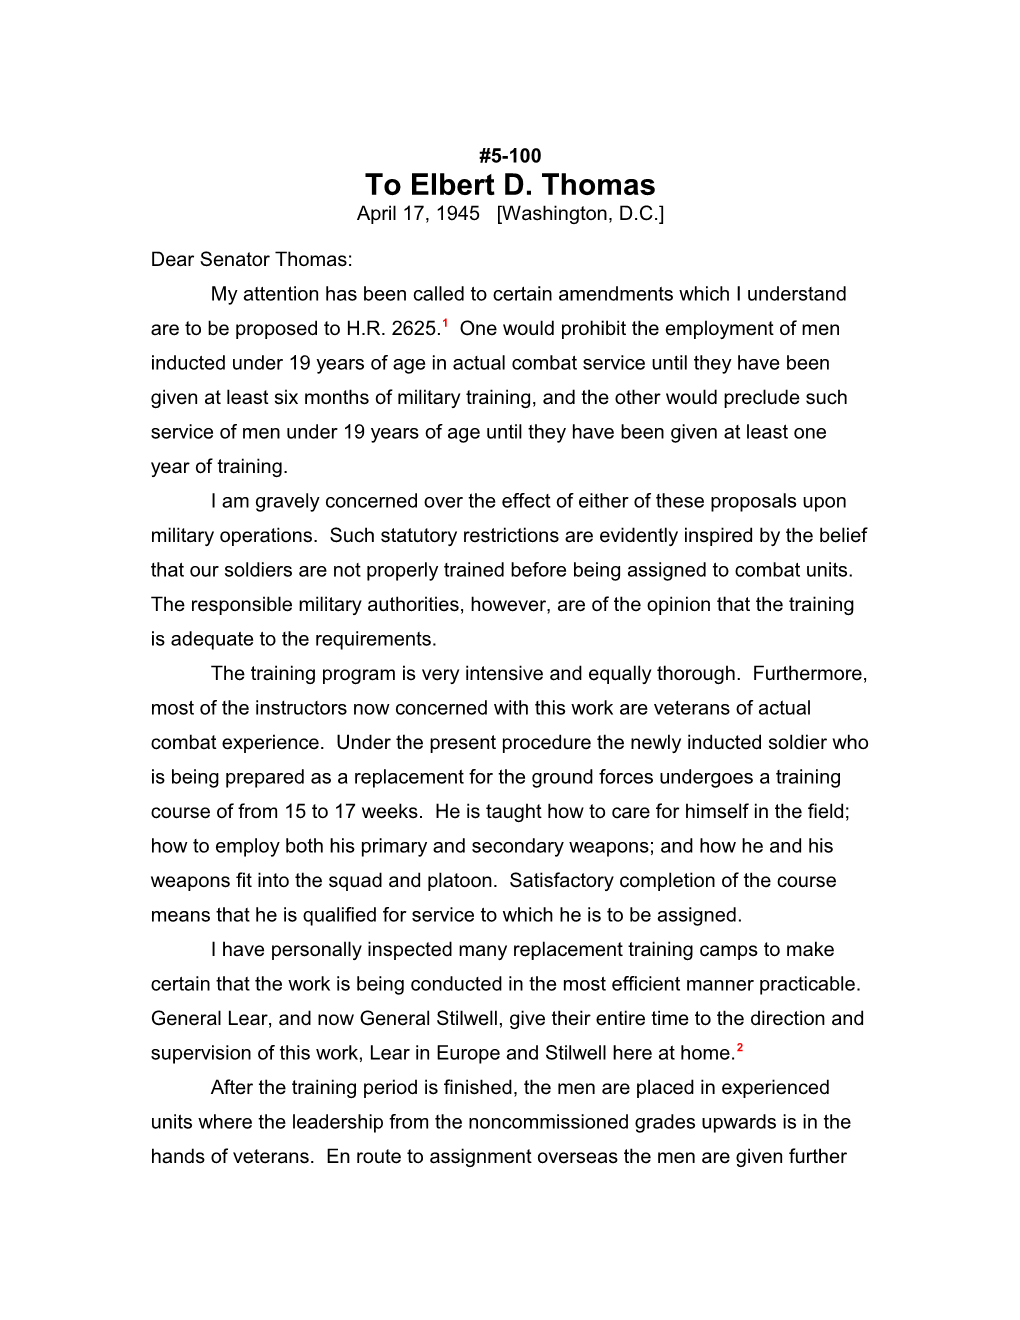 To Elbert D. Thomas